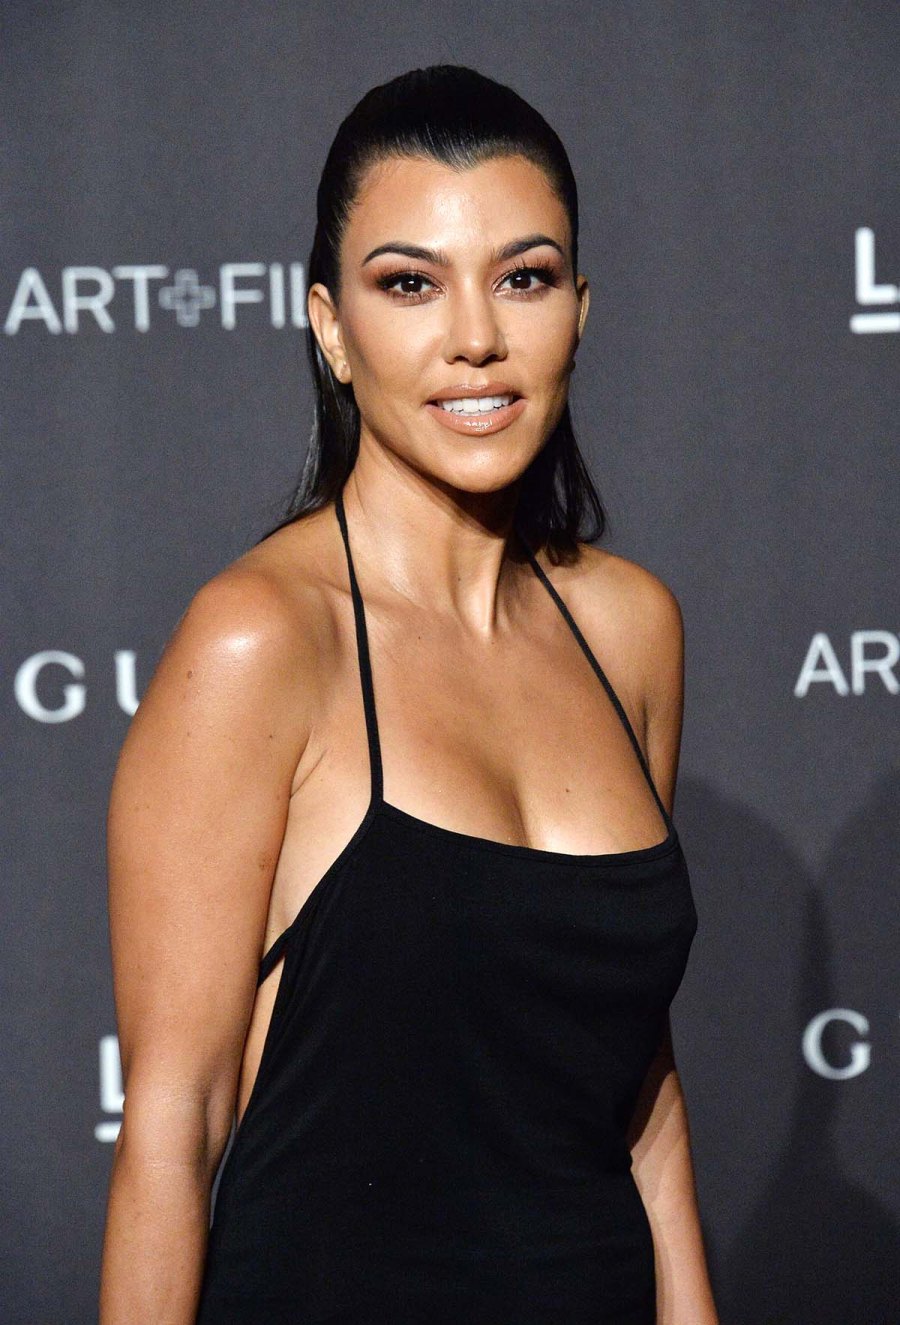 Kourtney Kardashian: I’m ‘Finally’ Getting My Energy Back After Stopping IVF